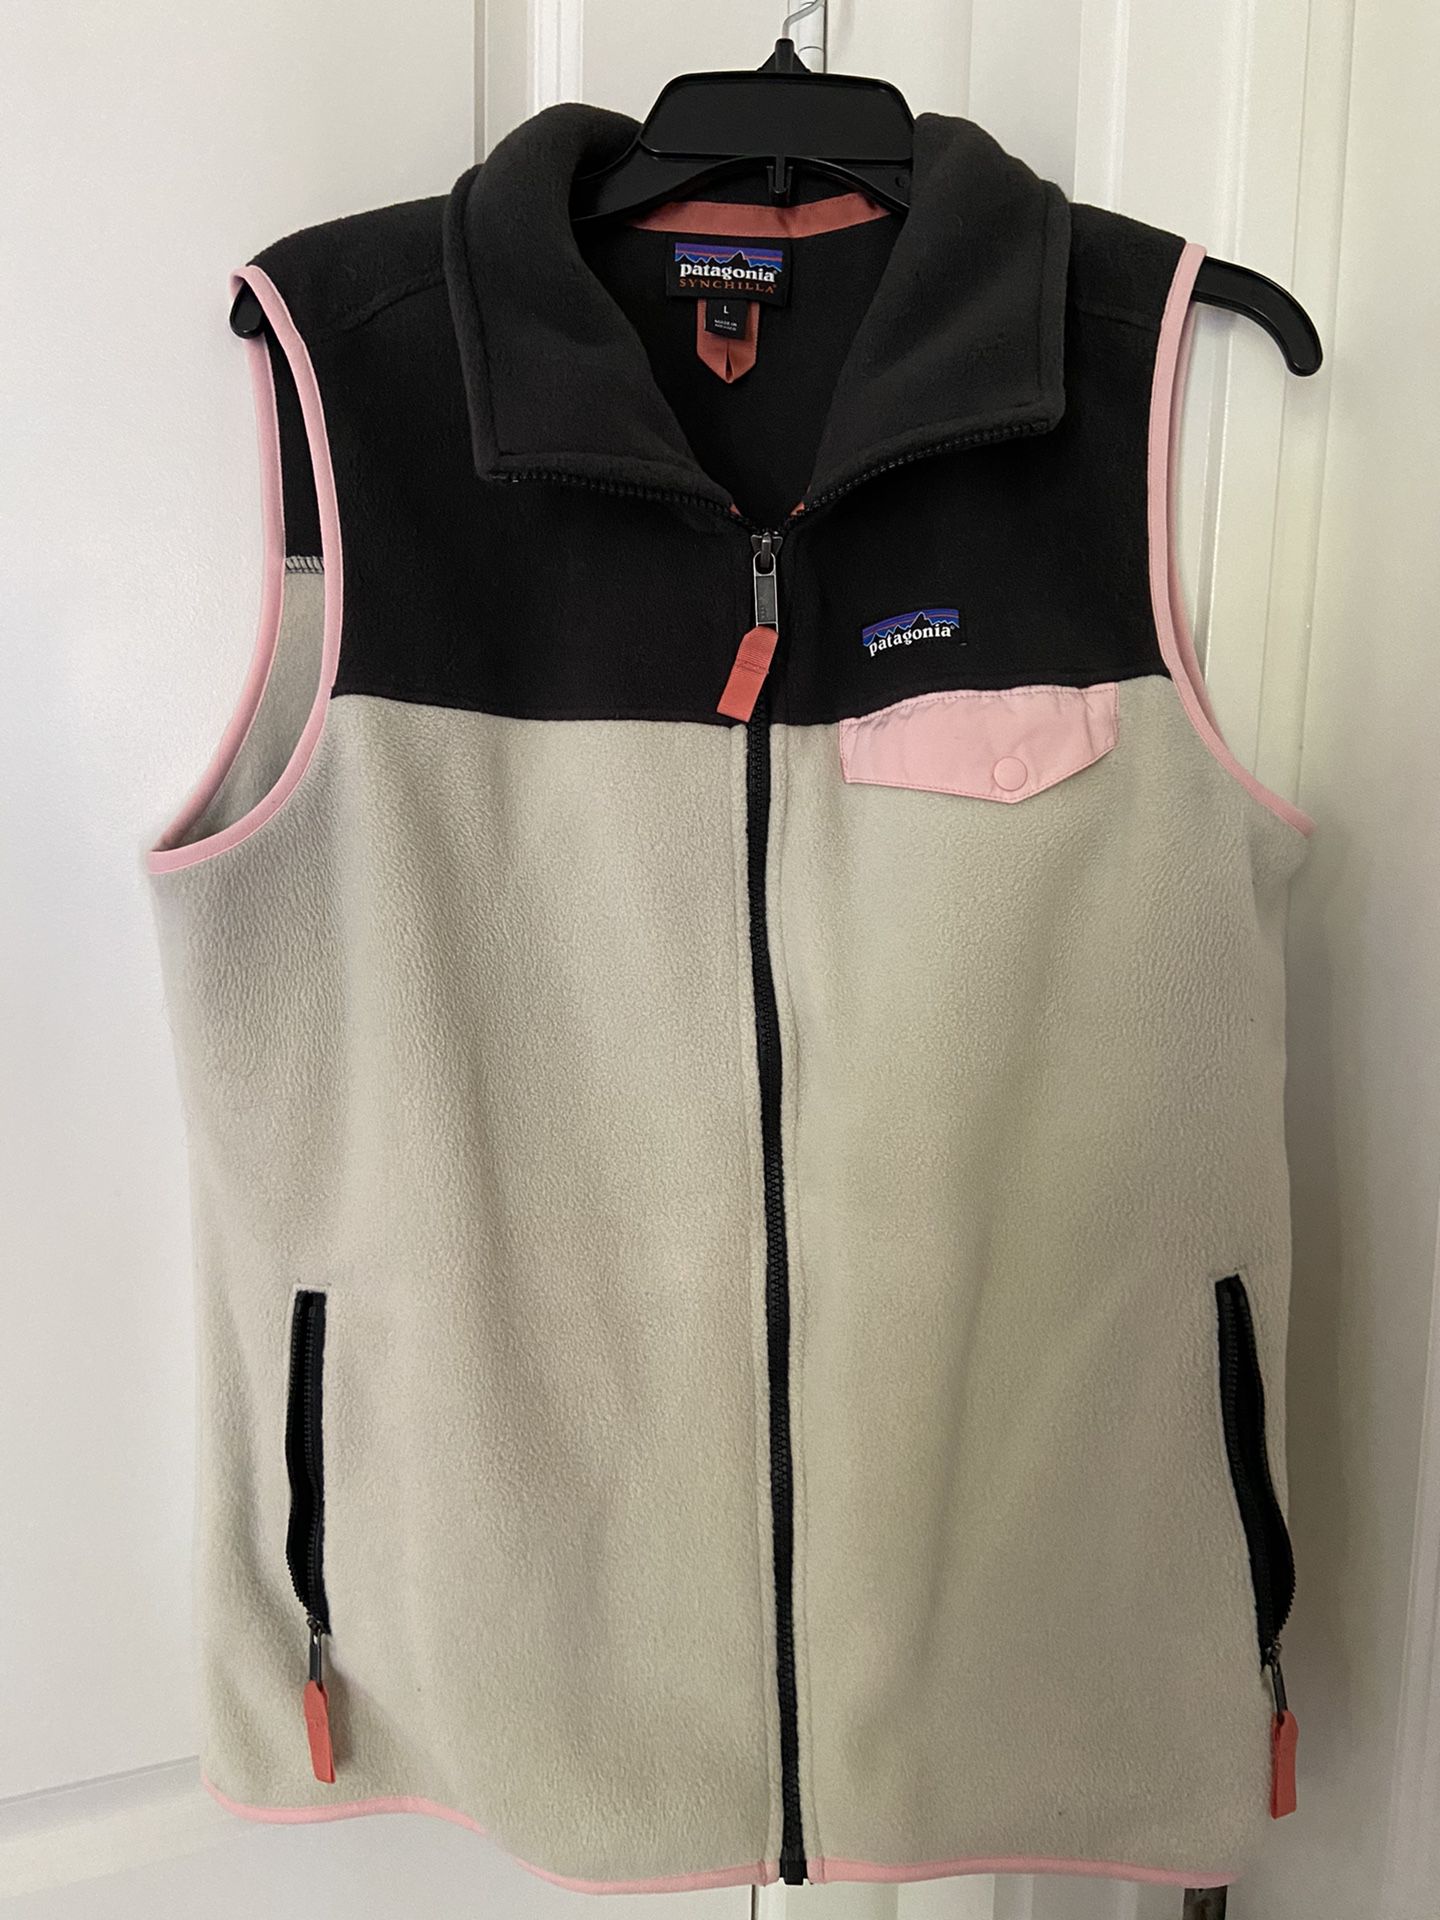 Women’s size Large vest Patagonia jacket